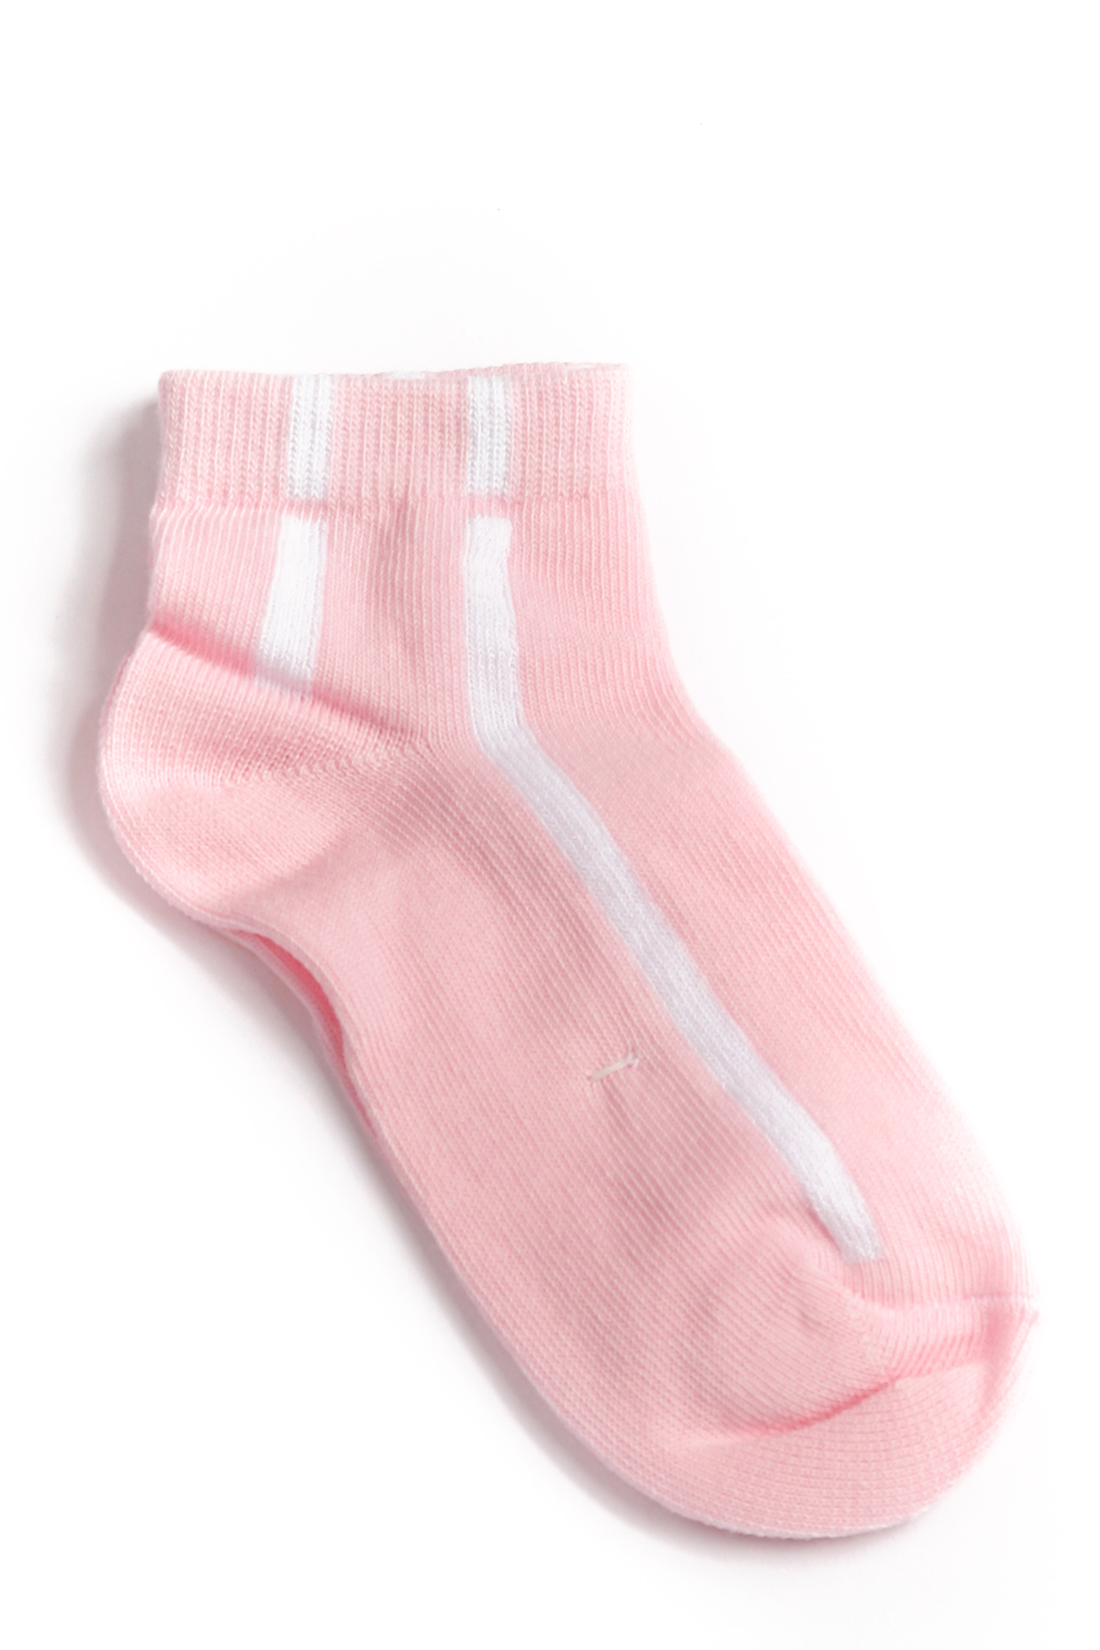 Носки для девочки (арт. baon BJ399001), размер 35/38, цвет розовый Носки для девочки (арт. baon BJ399001) - фото 1